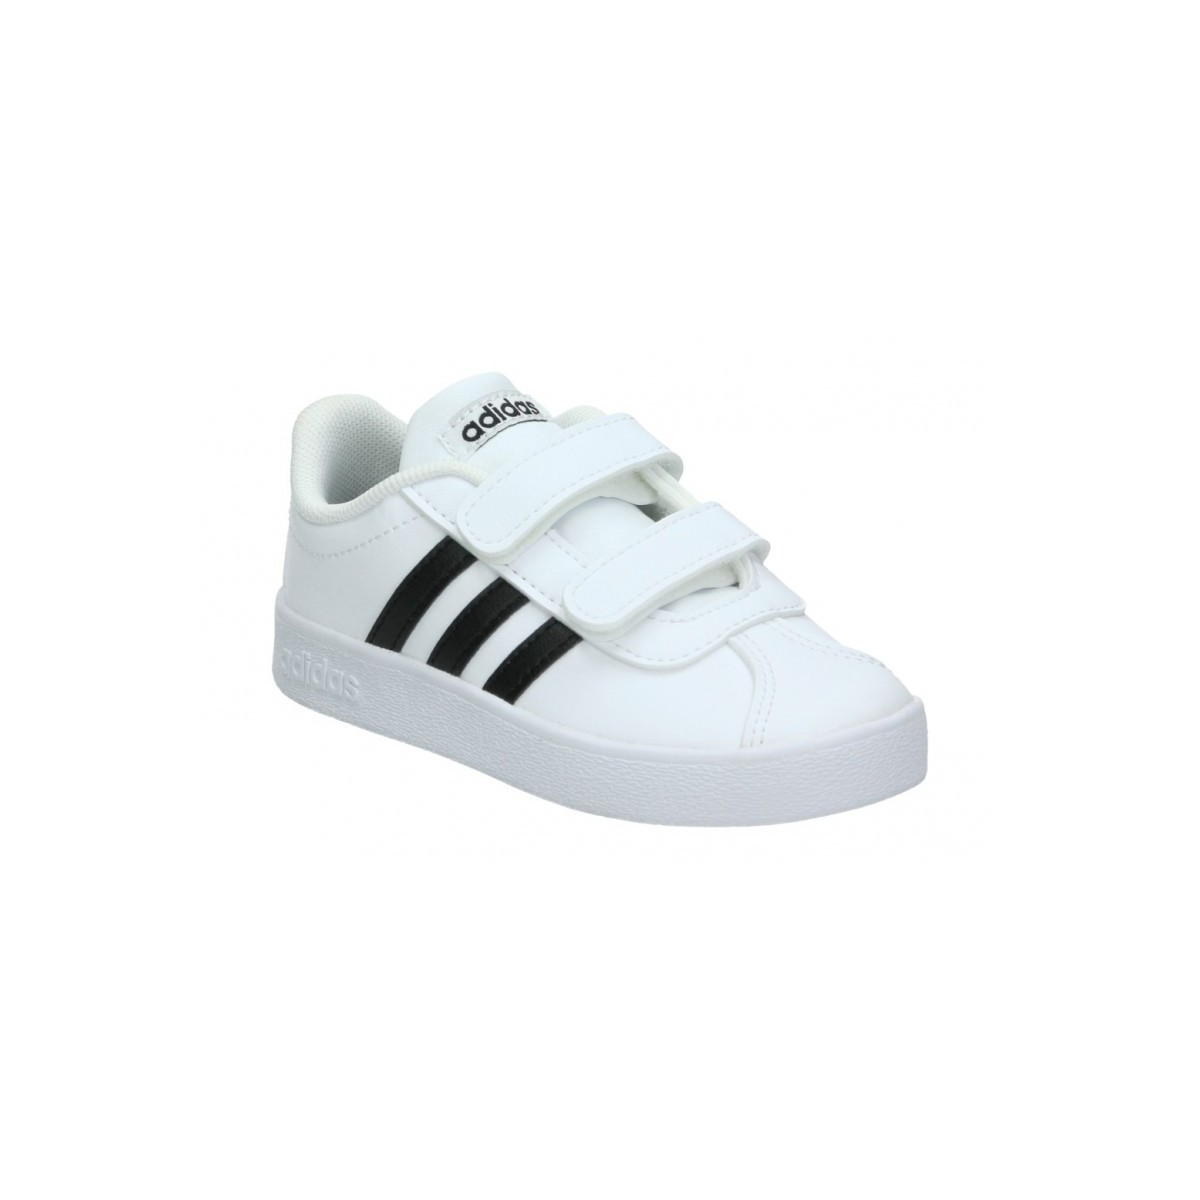 Adidas rebajas zapatilla bebe blanca, ultima talla 21 Mtdb1839